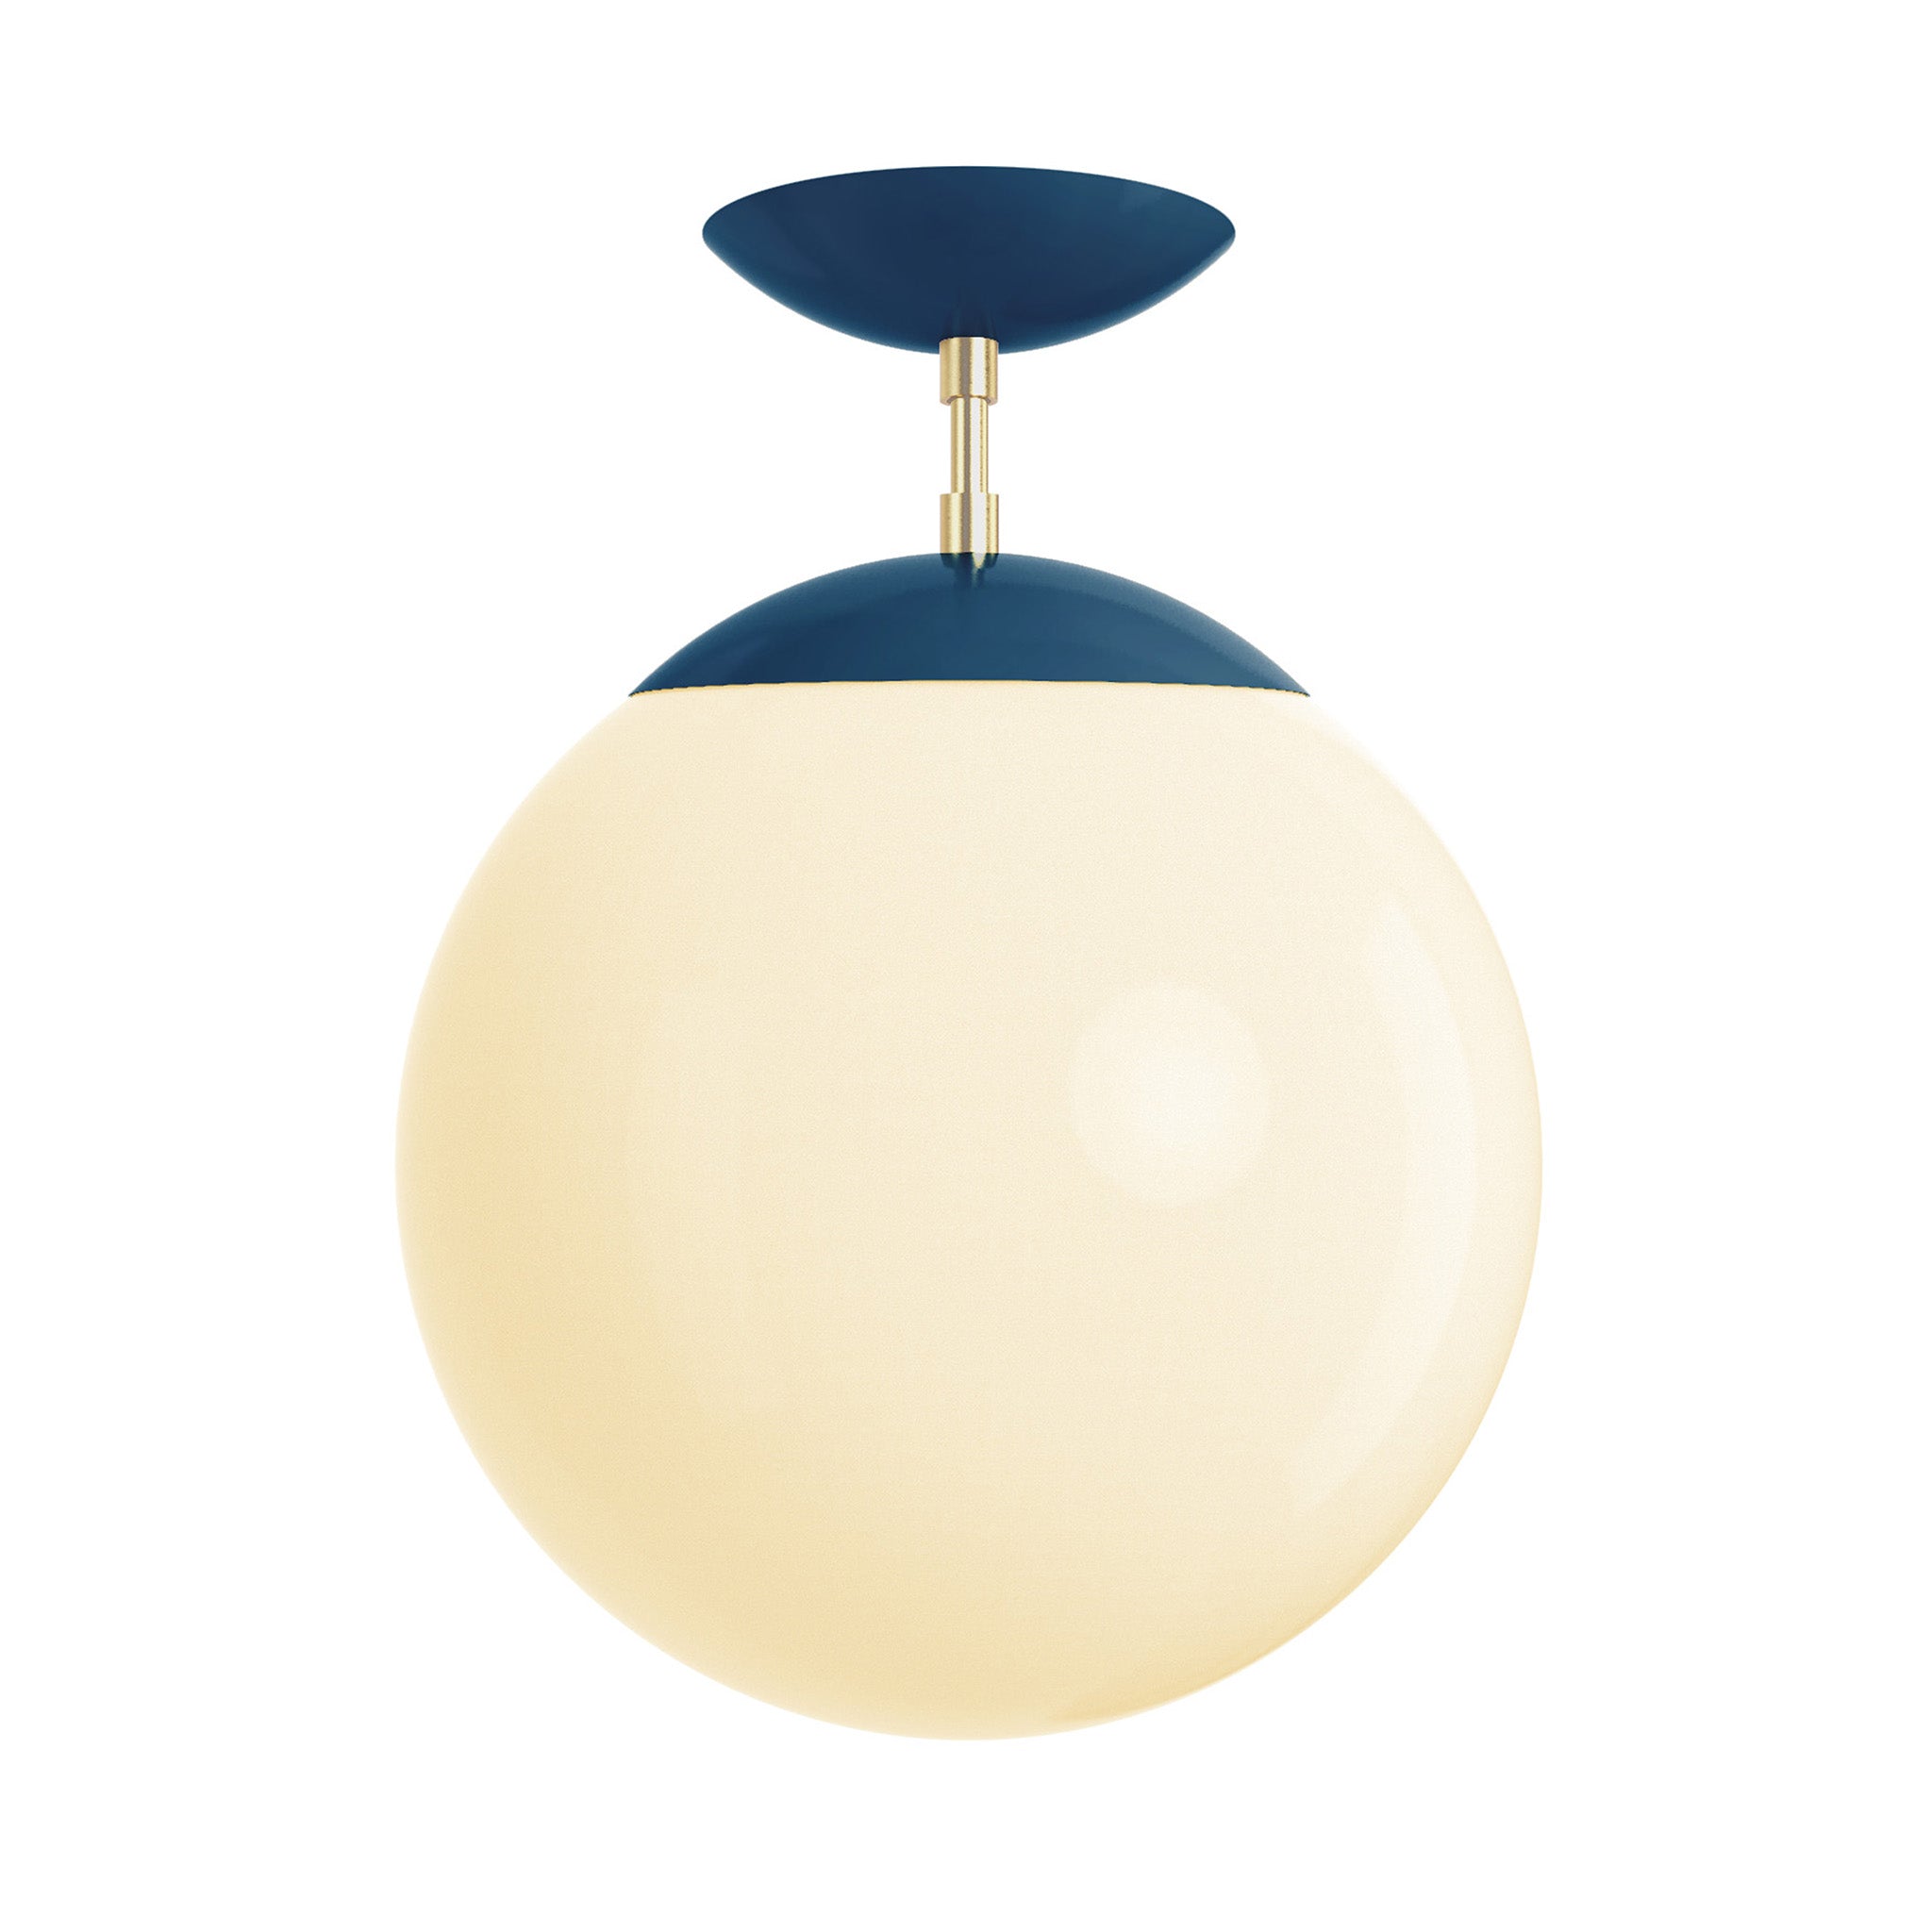 Brass and slate blue cap white globe flush mount 12" dutton brown lighting